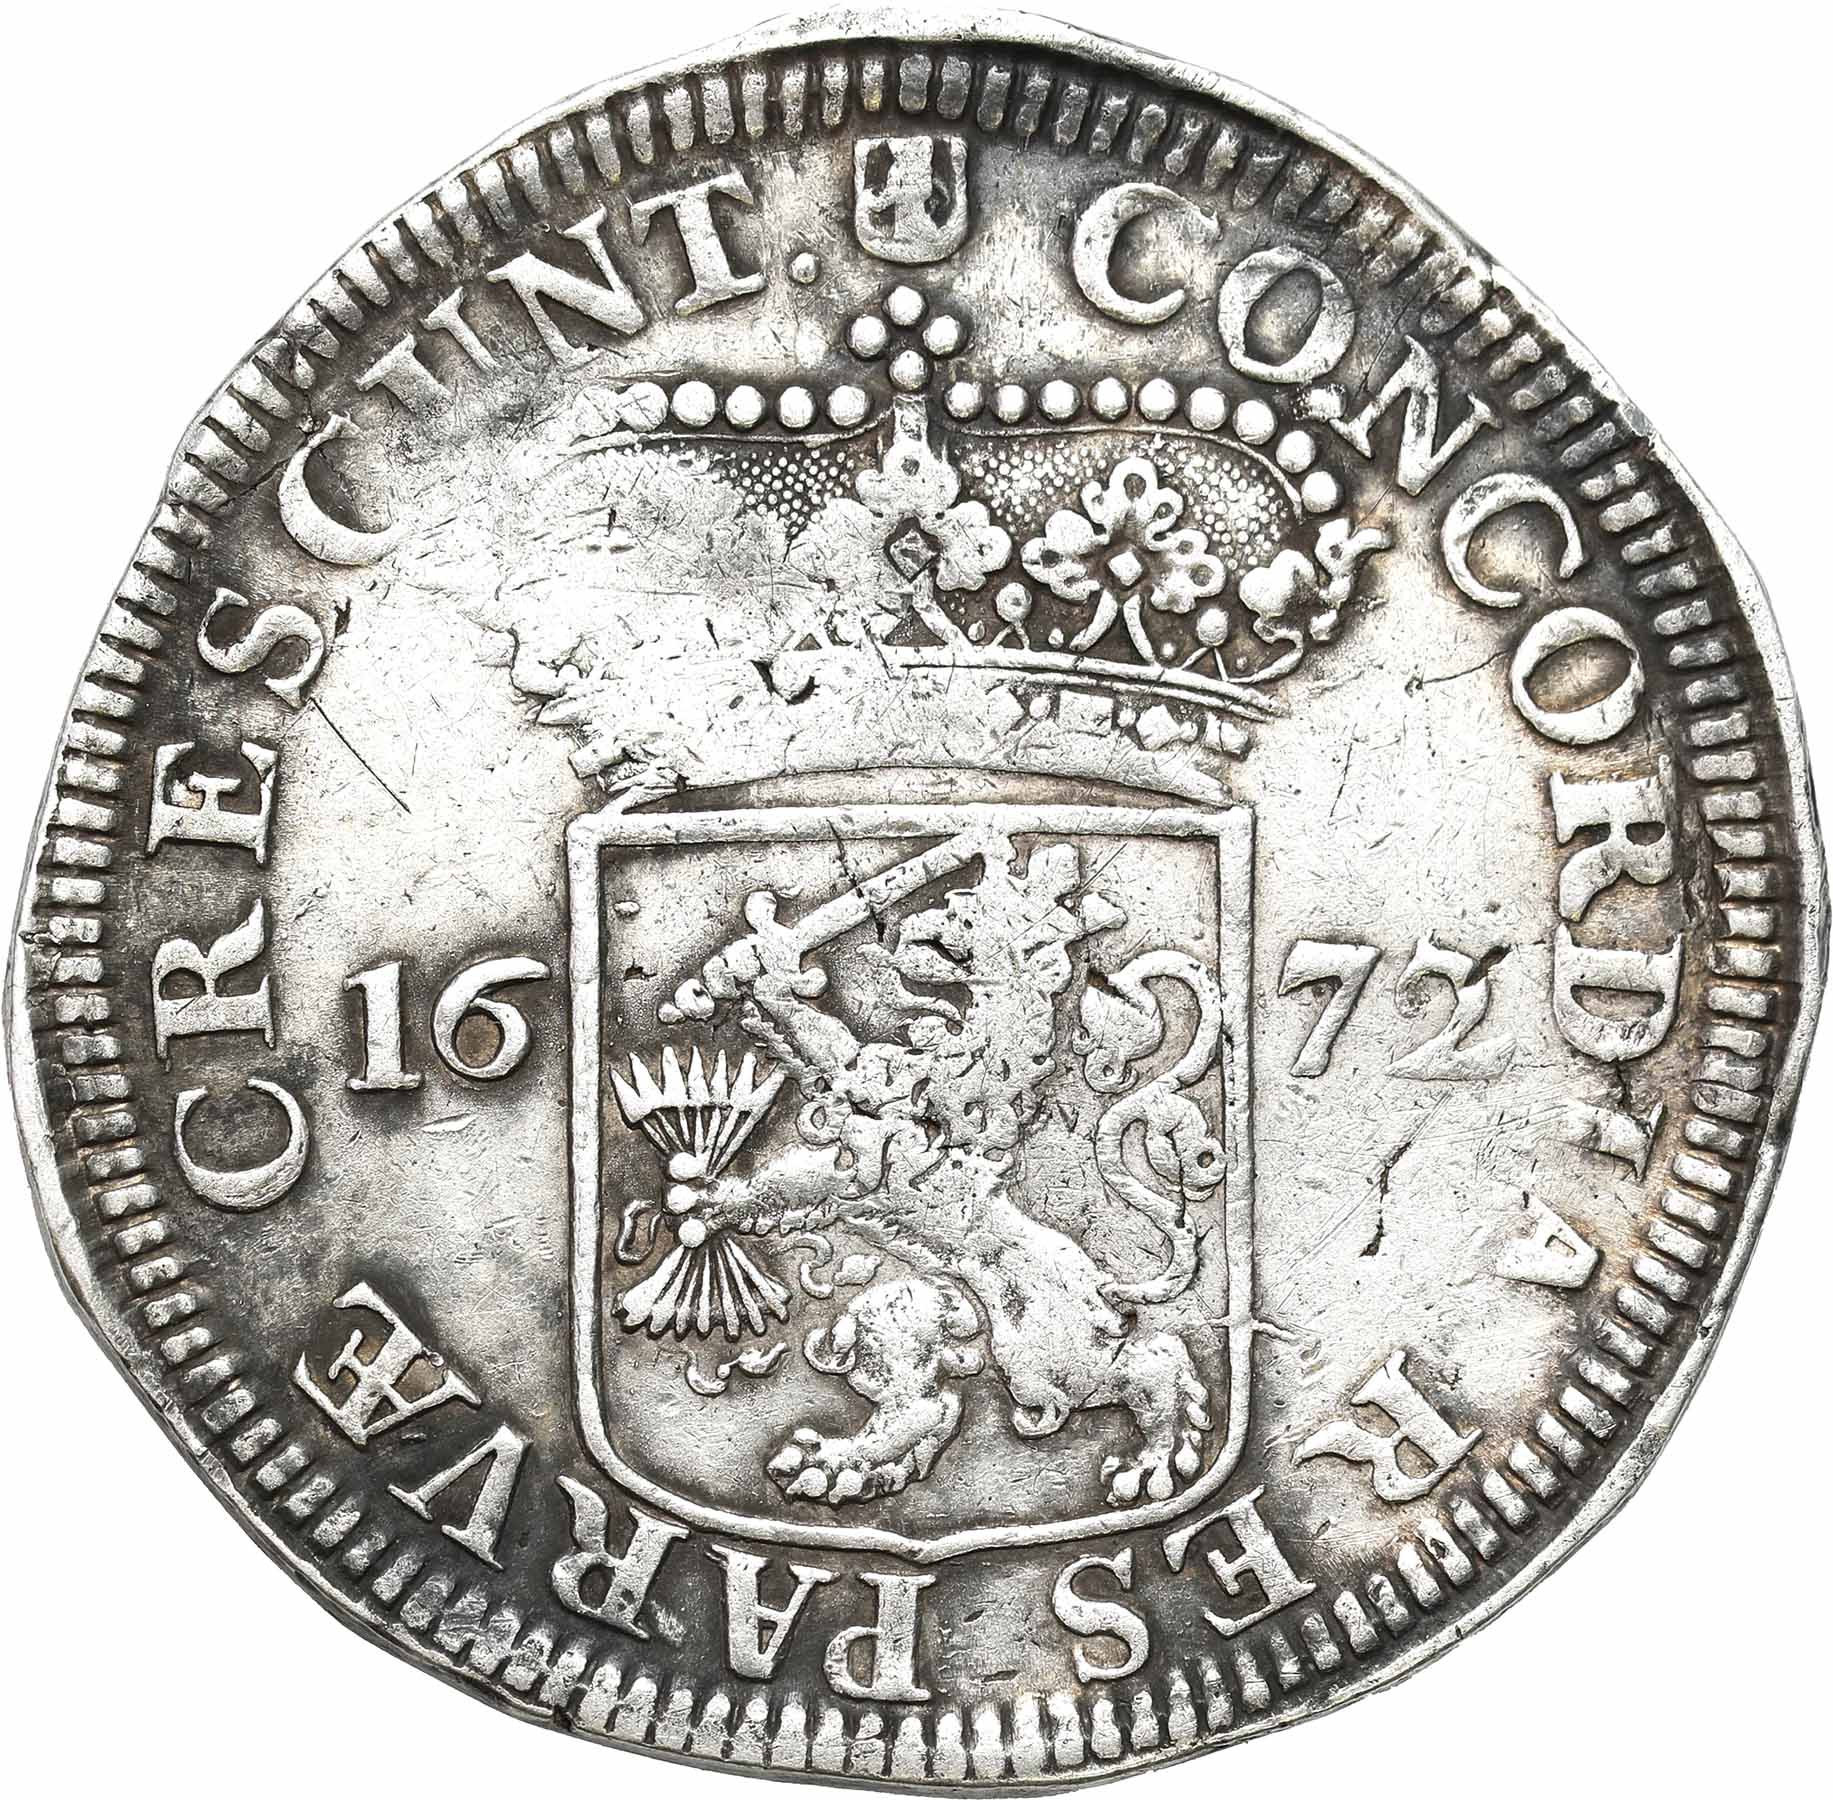 Niderlandy, Holland. Talar (silverdukat) 1672 - przebitka